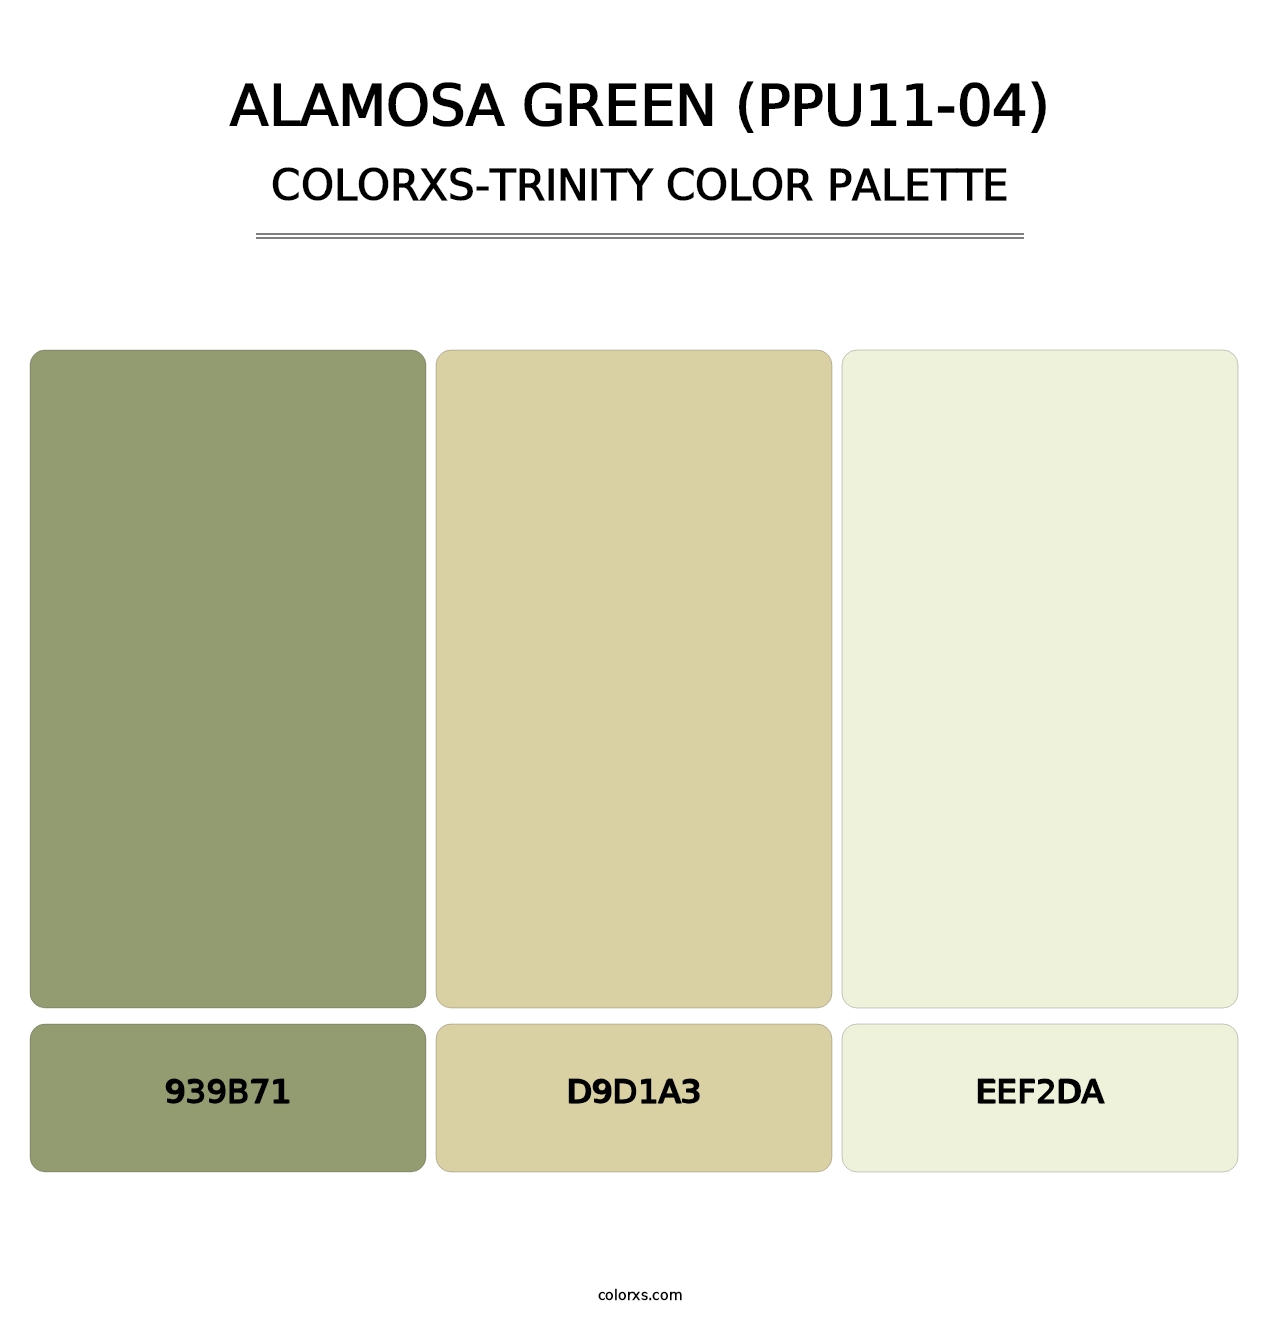 Alamosa Green (PPU11-04) - Colorxs Trinity Palette